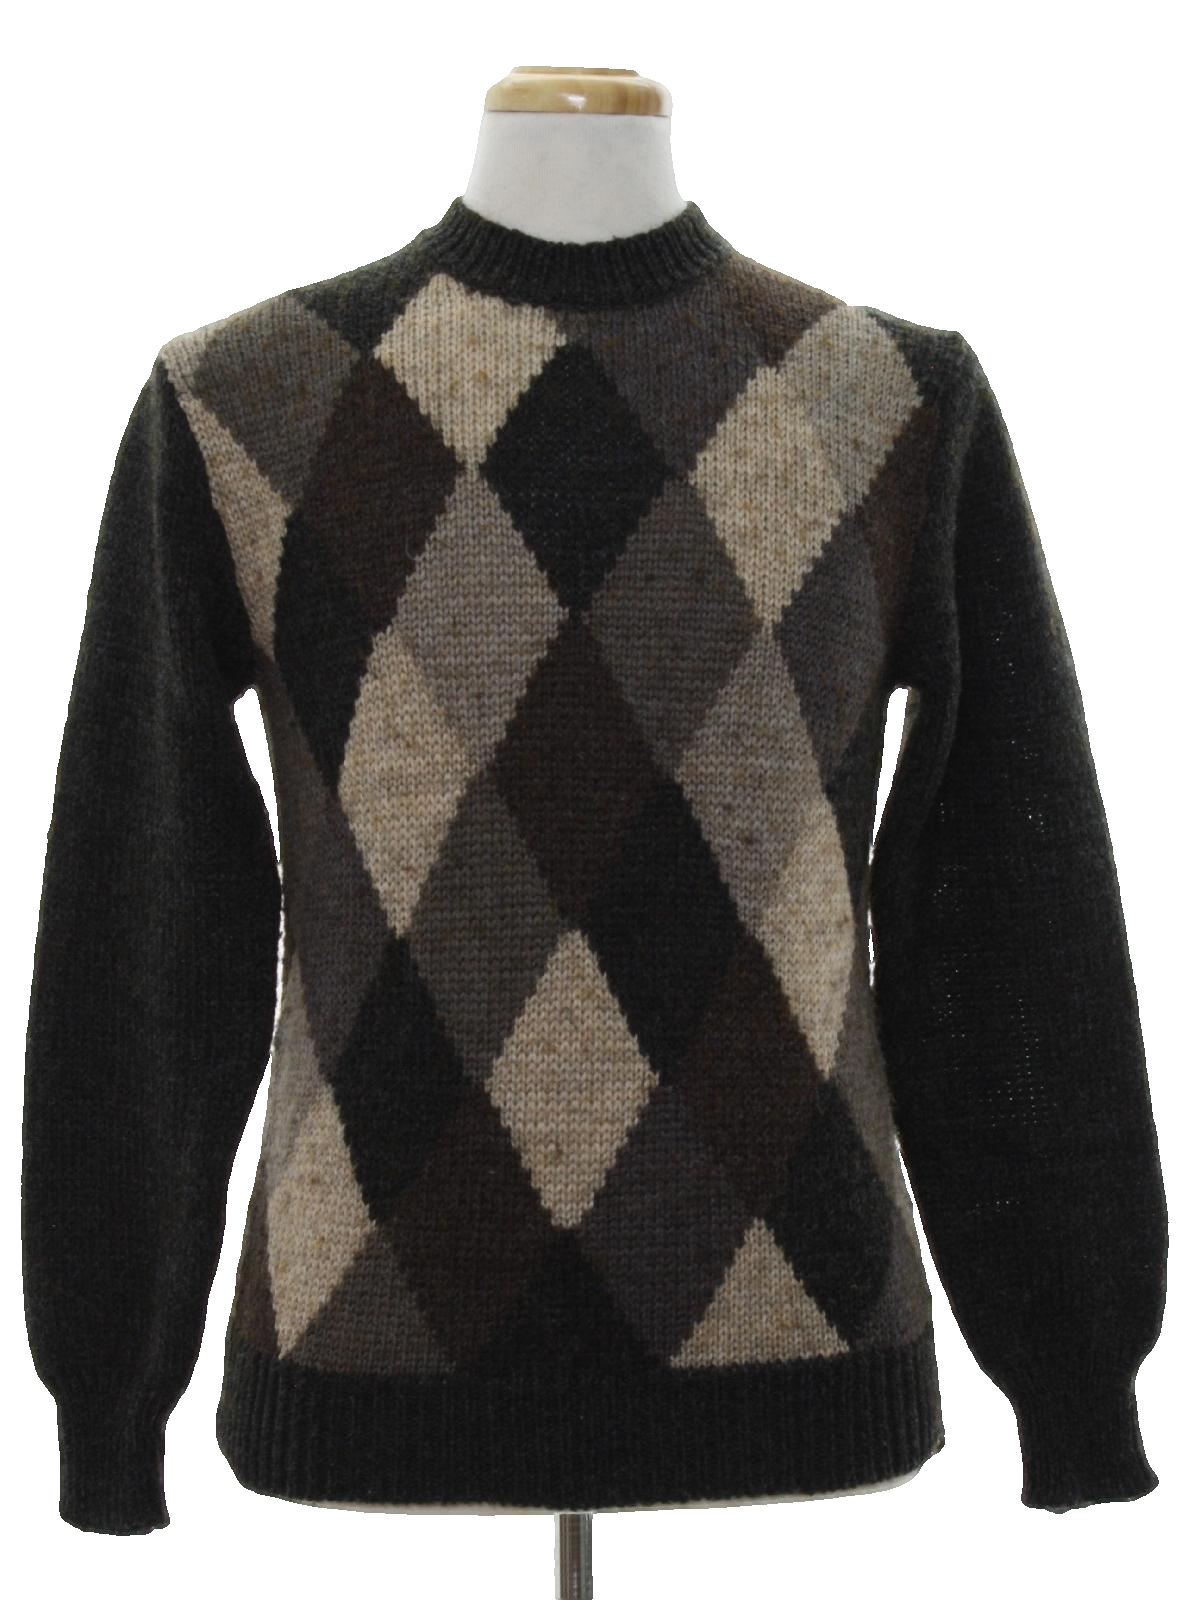 Retro 1980's Sweater (Oak Tree) : 80s -Oak Tree- Mens dark heathered ...